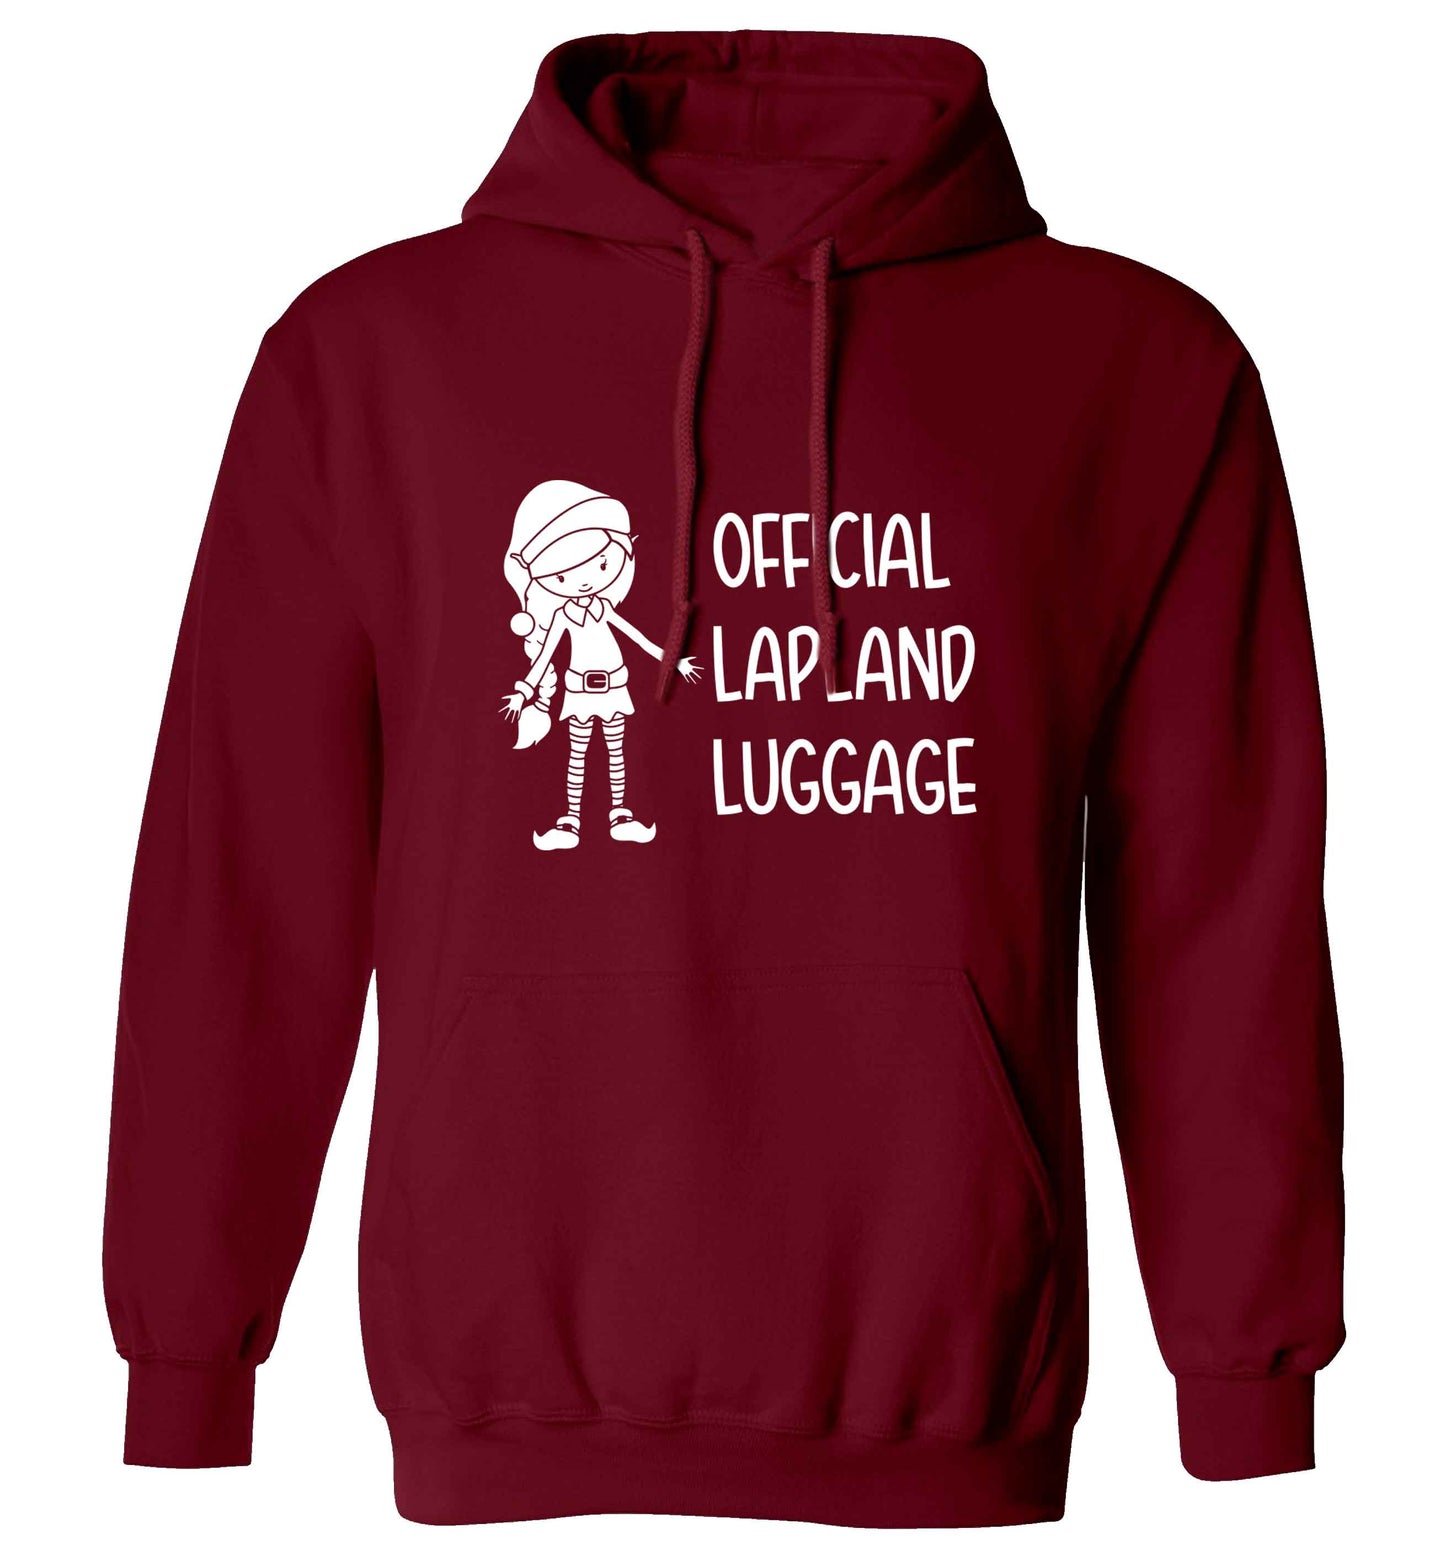 Official lapland luggage - Elf snowflake adults unisex maroon hoodie 2XL